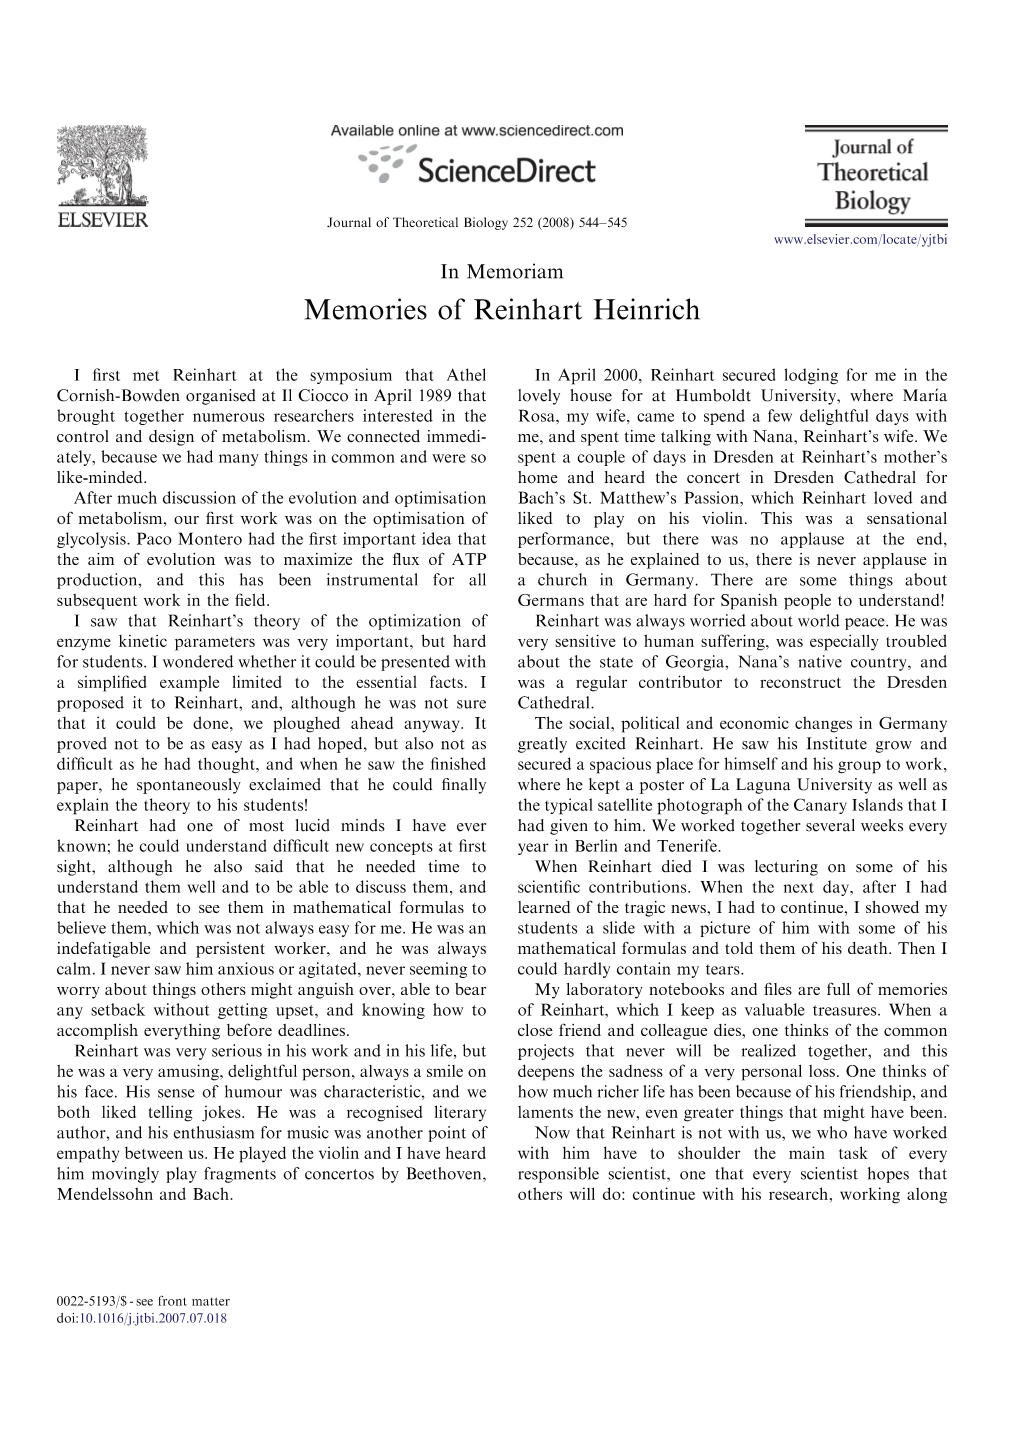 Memories of Reinhart Heinrich